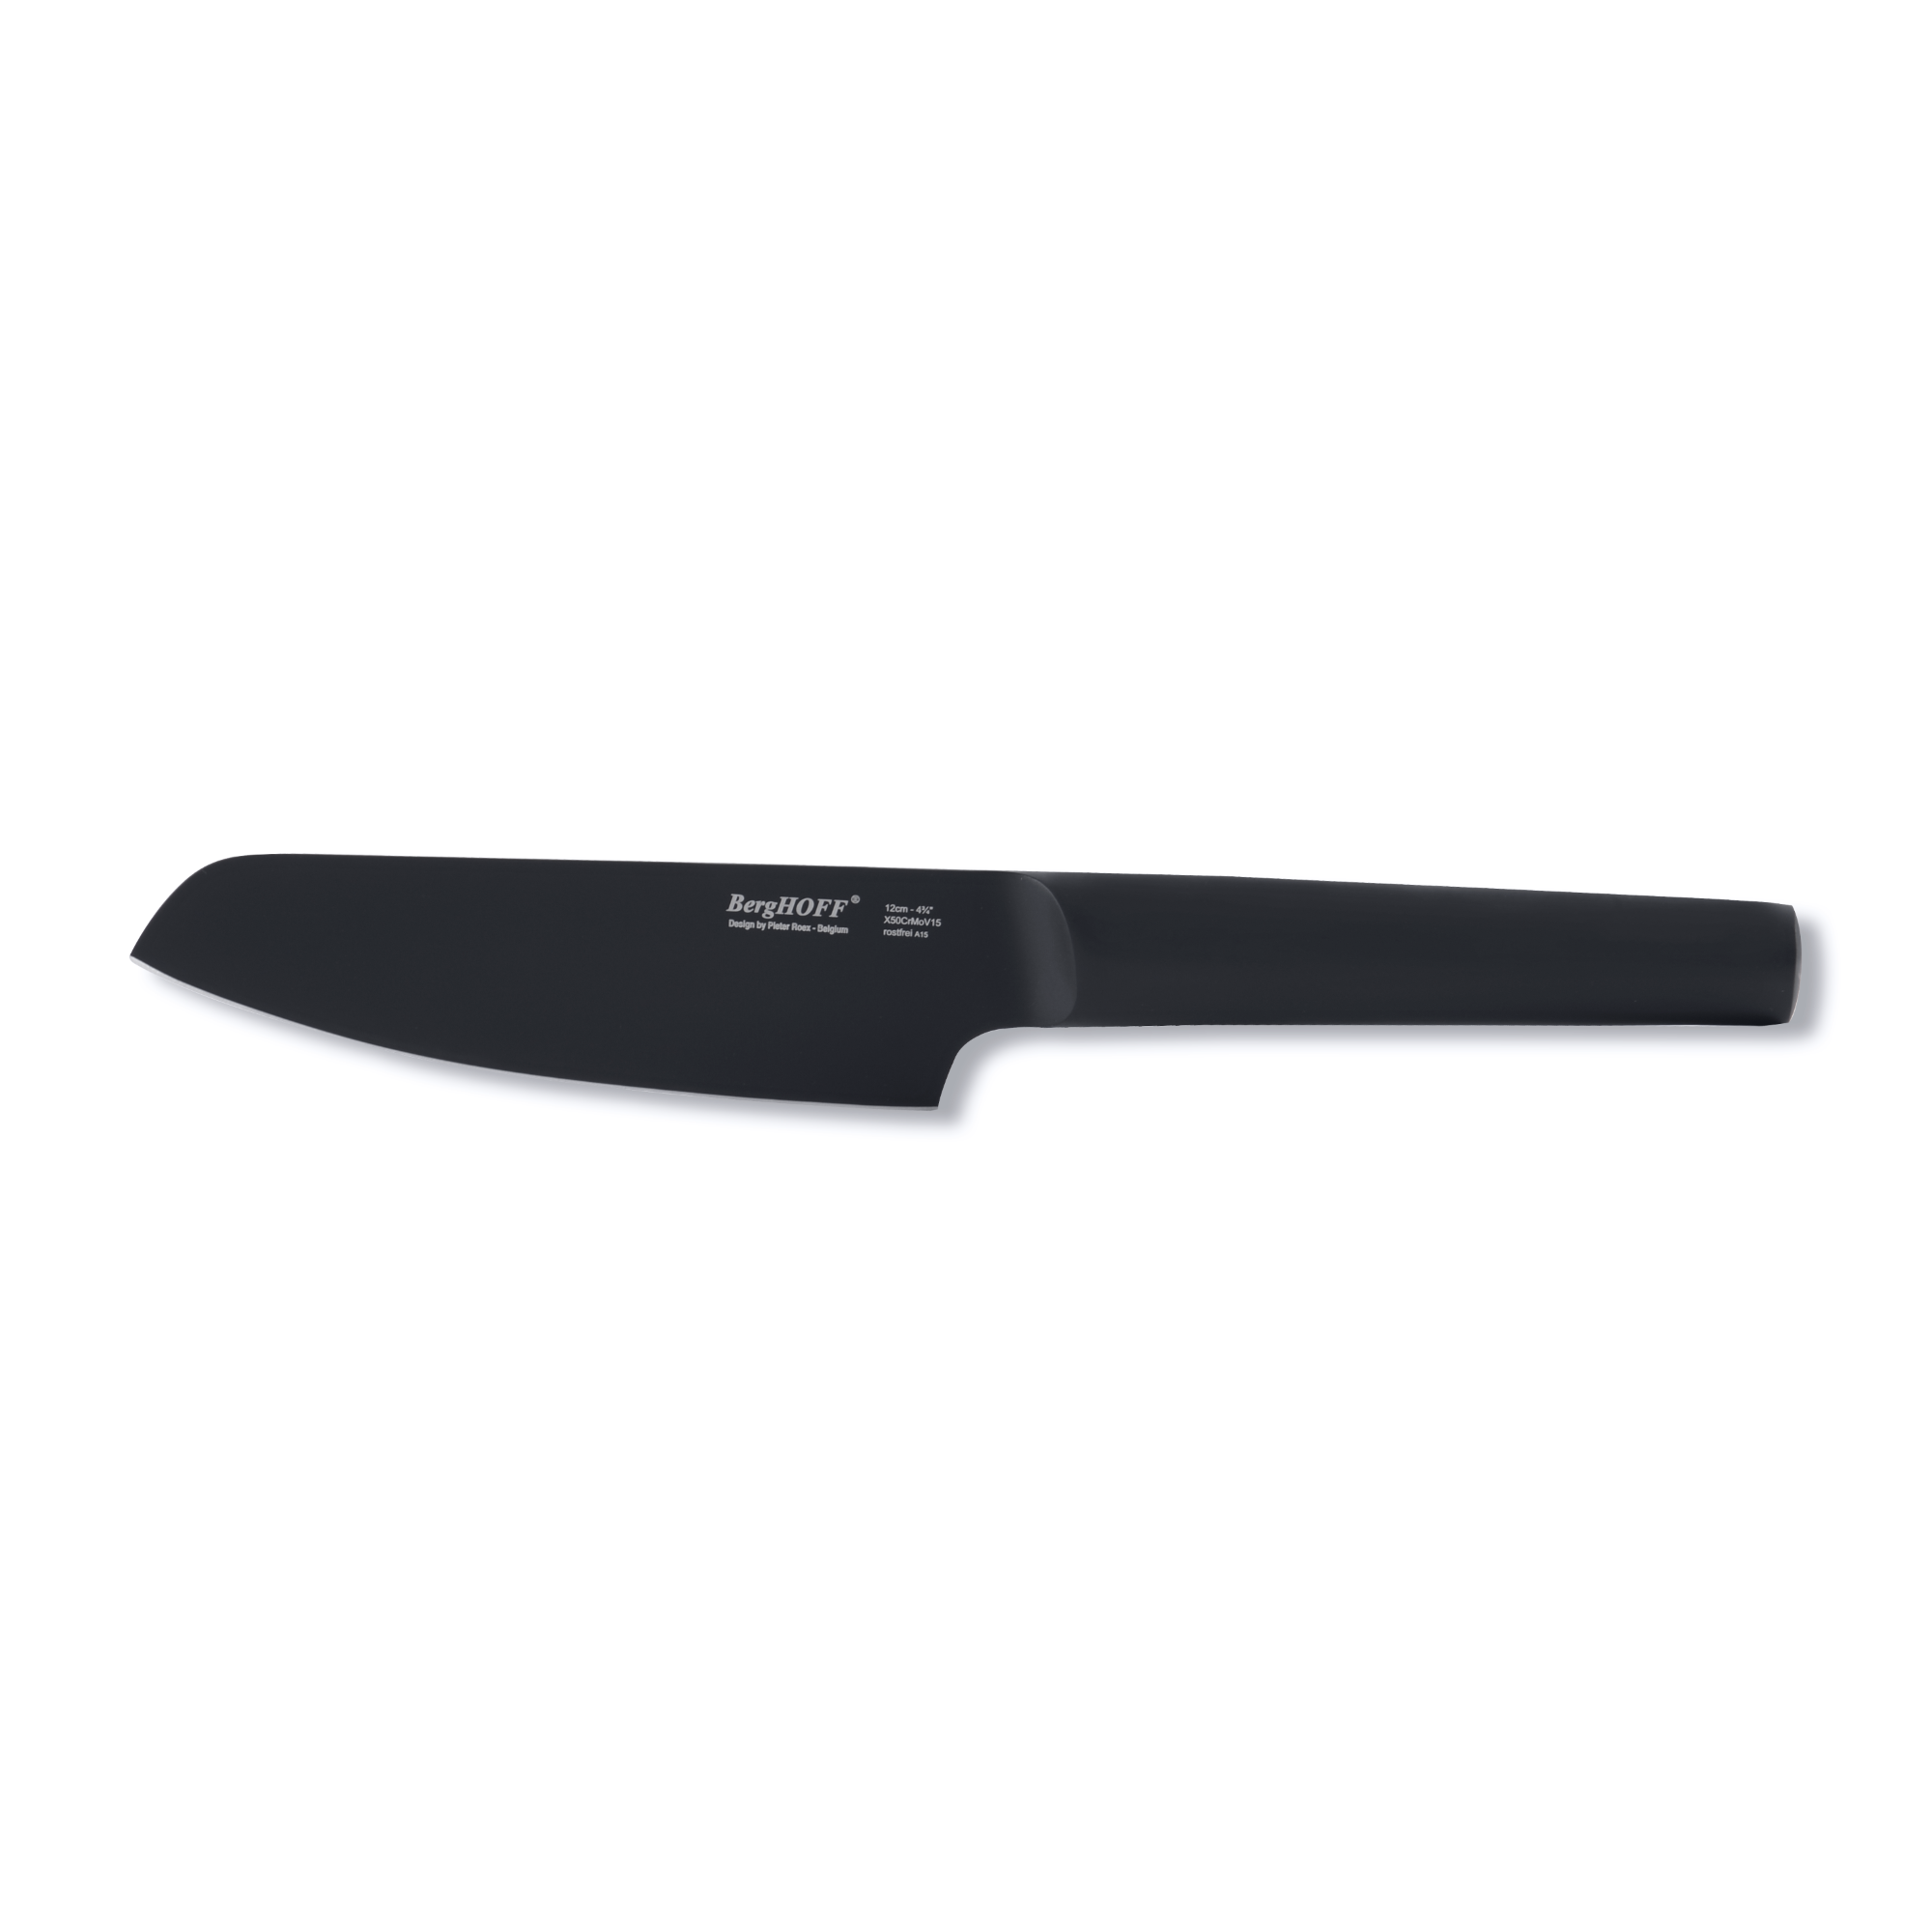 Vegetable knife black 12 cm - Ron | Official BergHOFF website